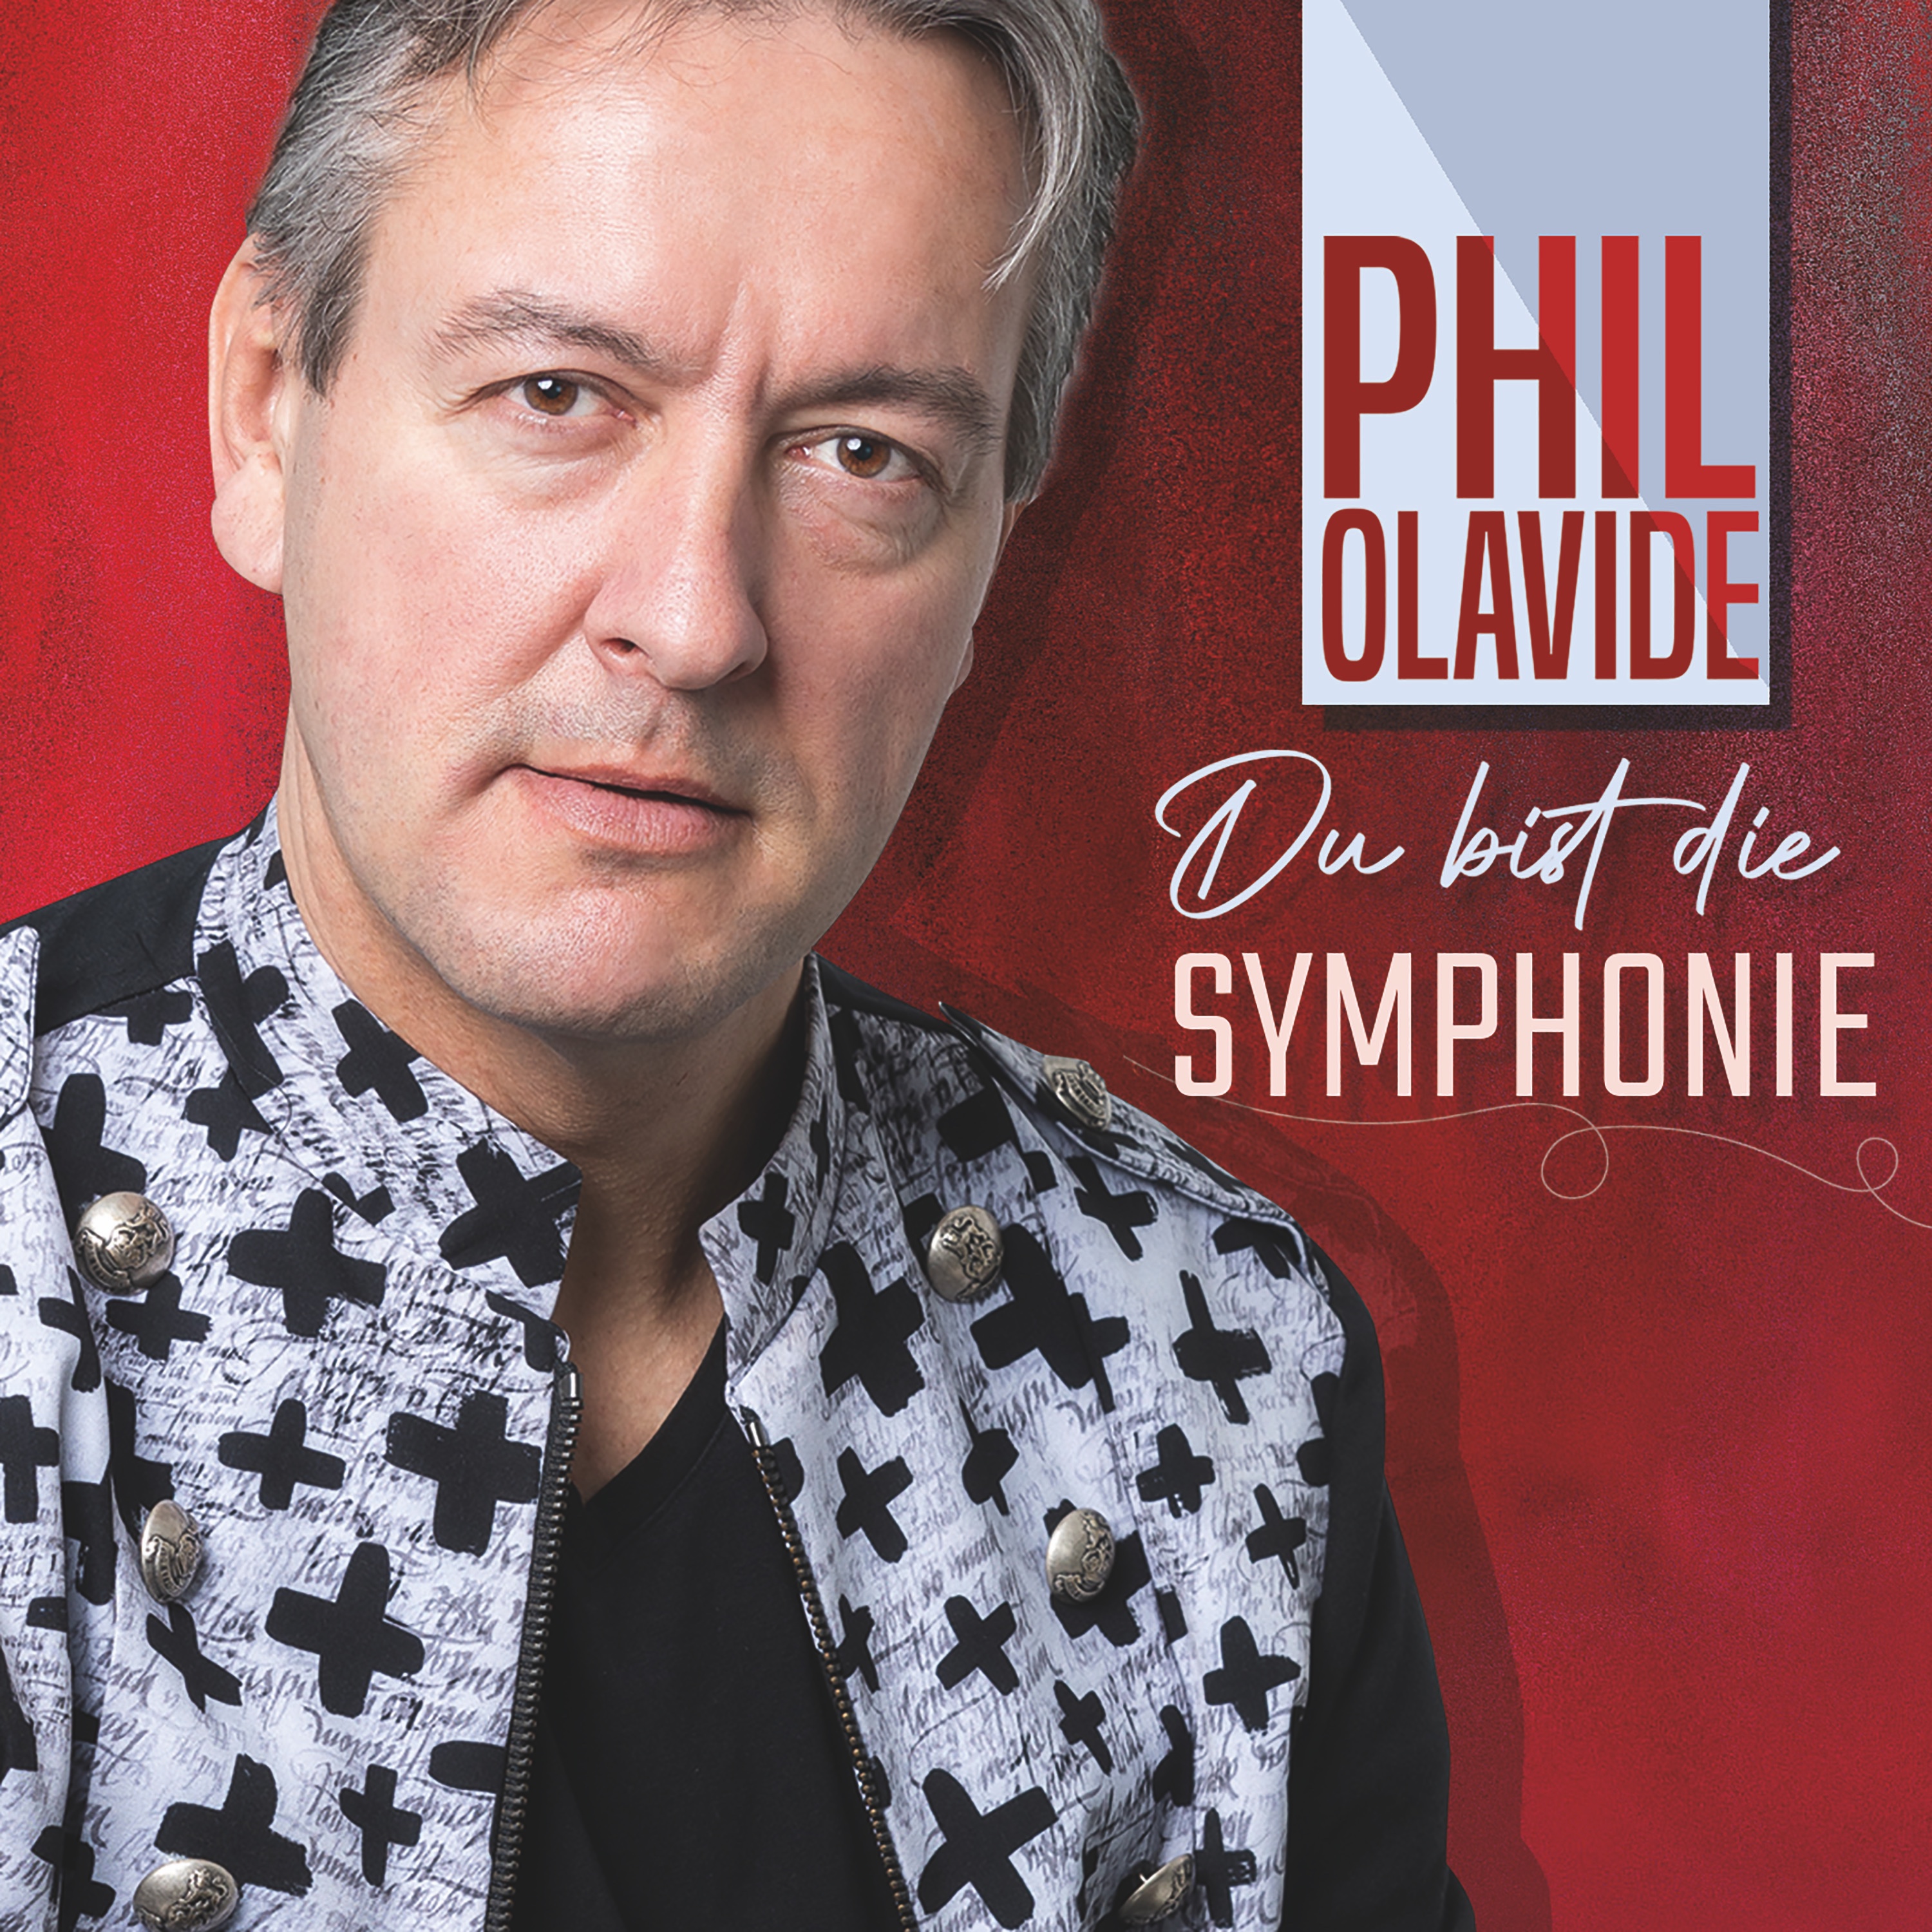 PHIL OLAVIDE * Du bist die Symphonie (Download-Track)